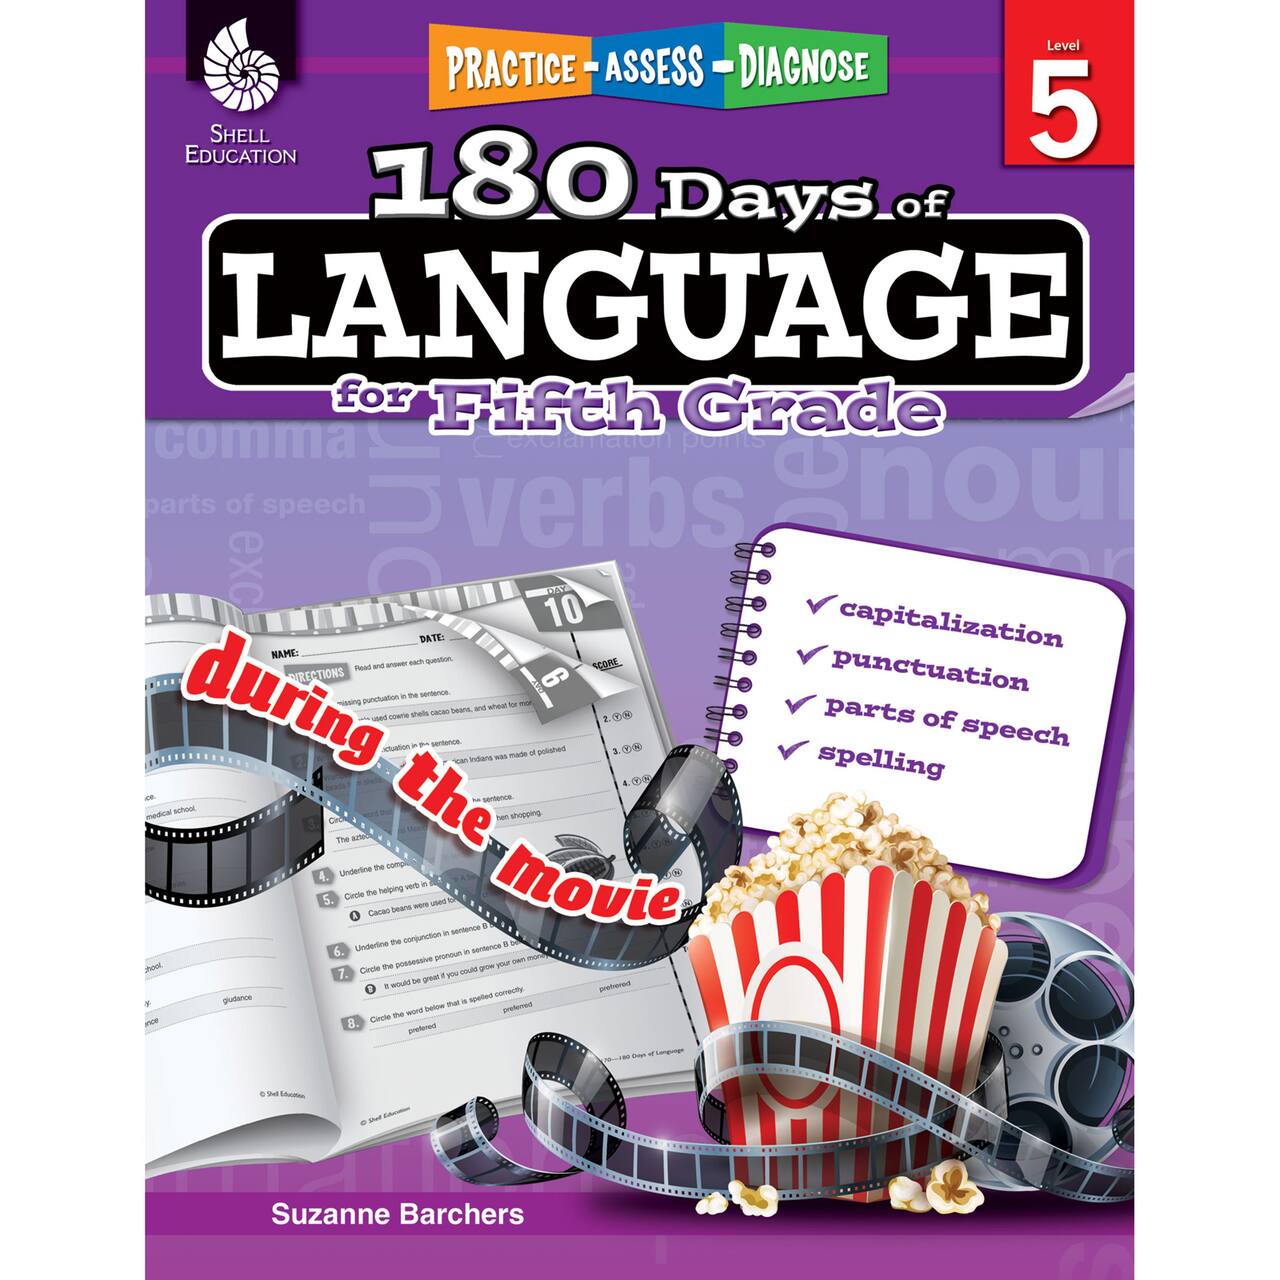 Shell Education 180 Days of Language, 5th Grade